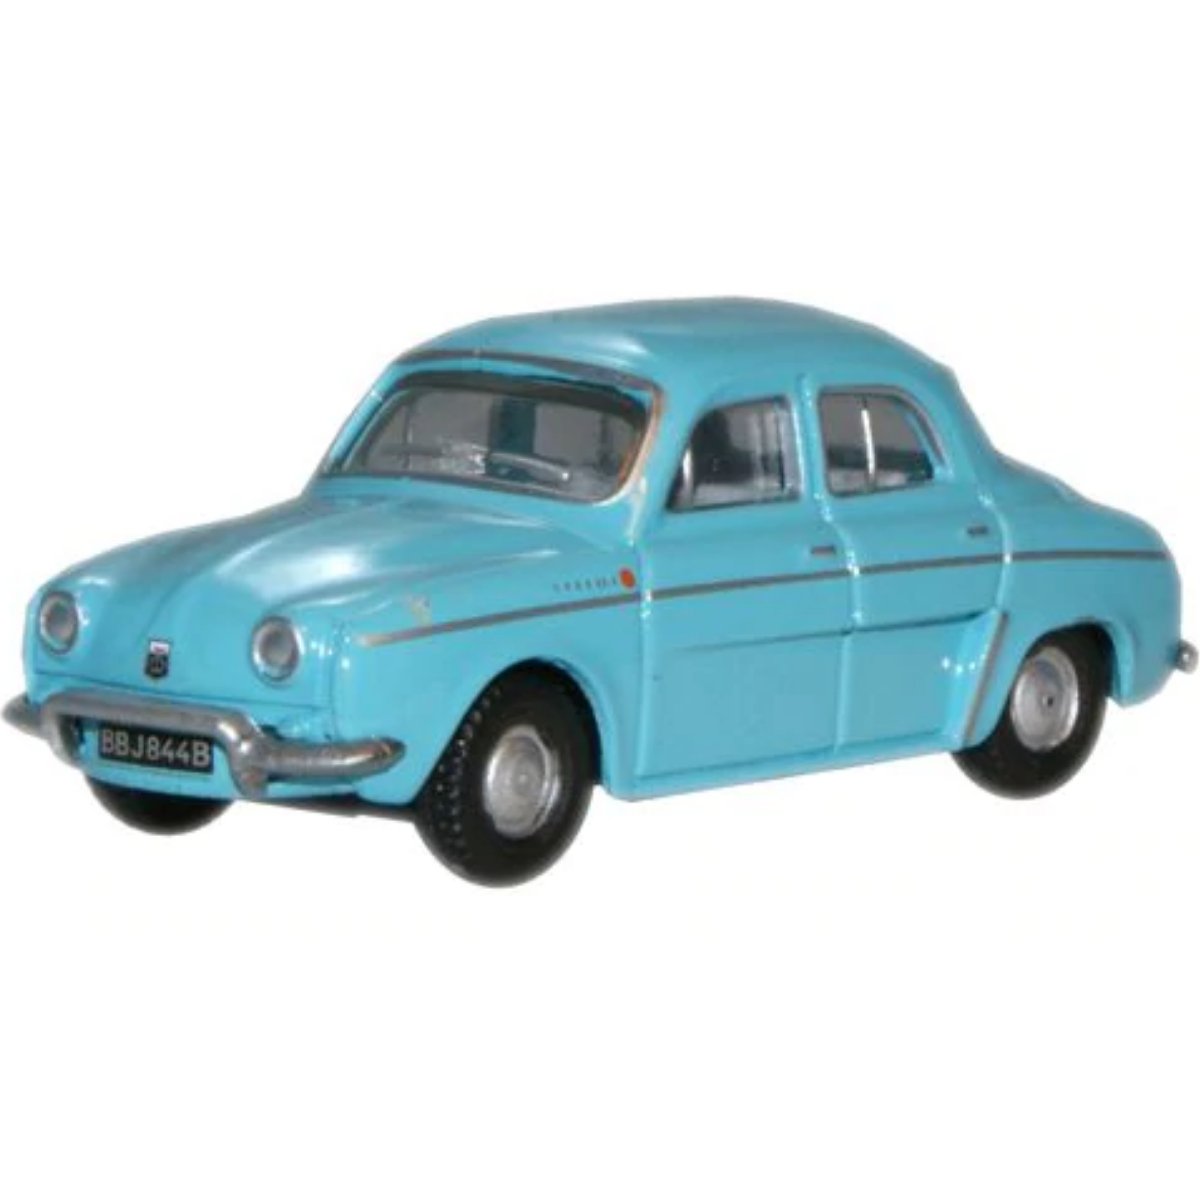 Oxford Diecast 76RD001 Light Blue Renault Dauphine - Phillips Hobbies